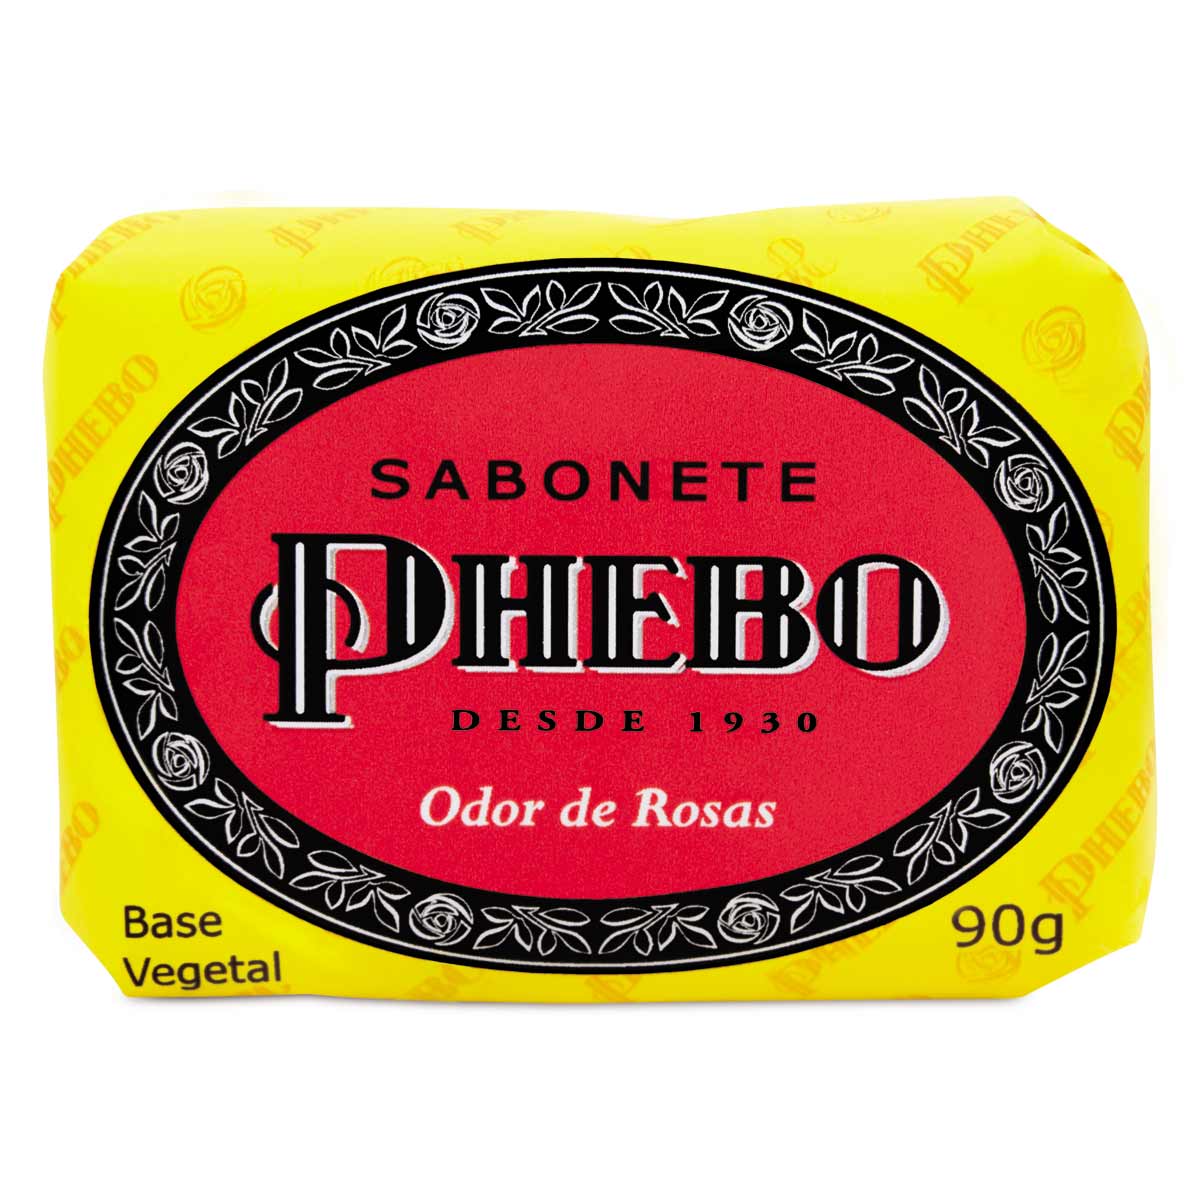 Sabonete de Glicerina PHEBO Olor de Rosas 90g